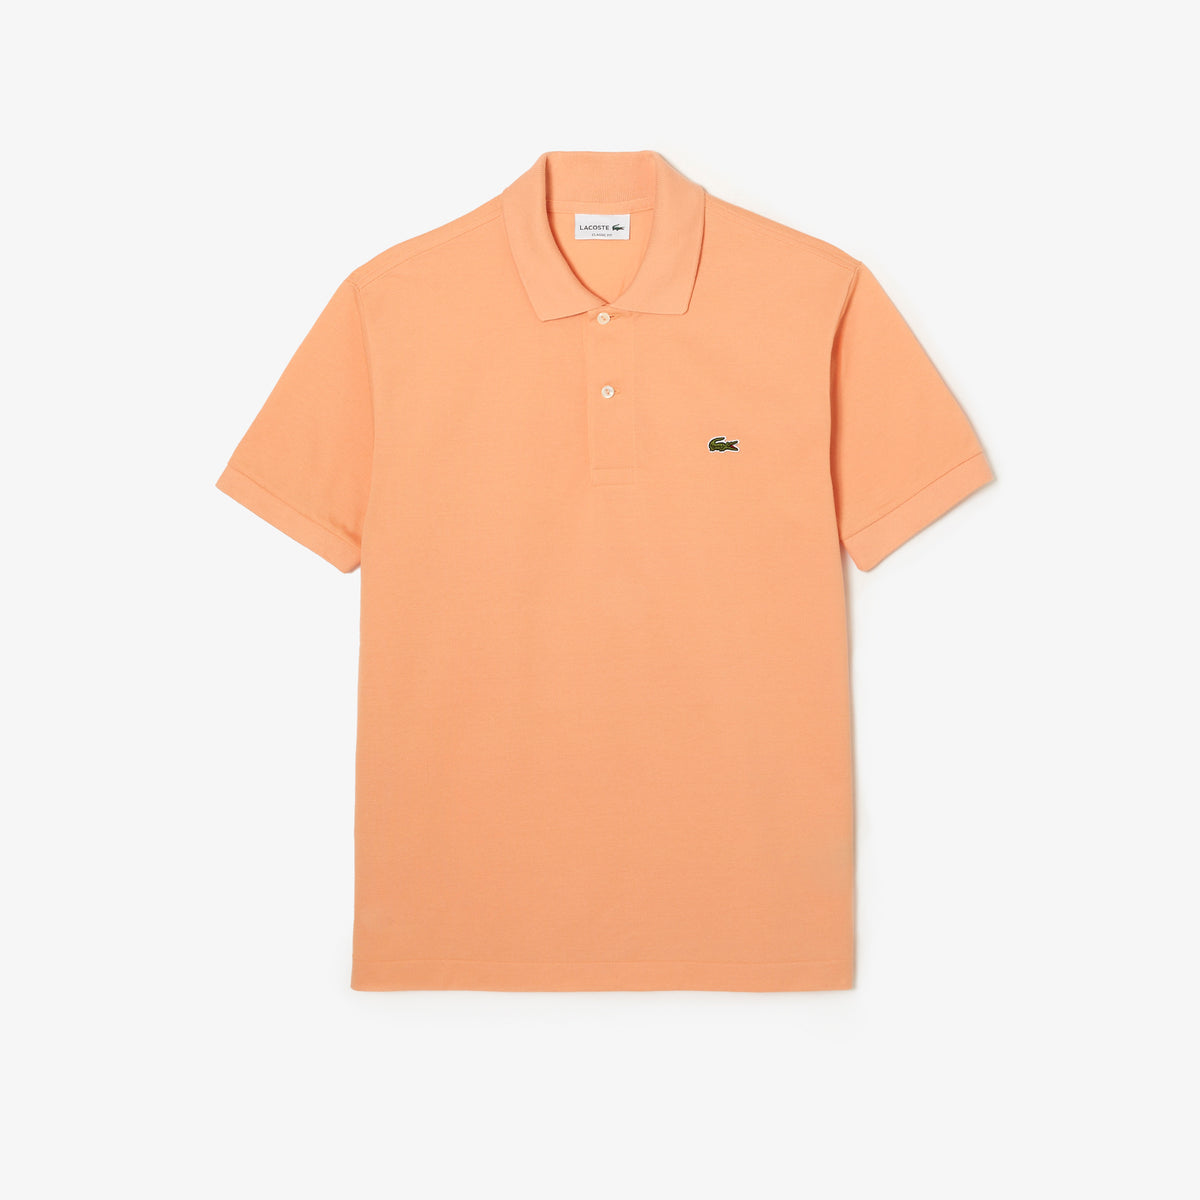 Lacoste - Classic Fit Polo Shirt - Light Orange HEB